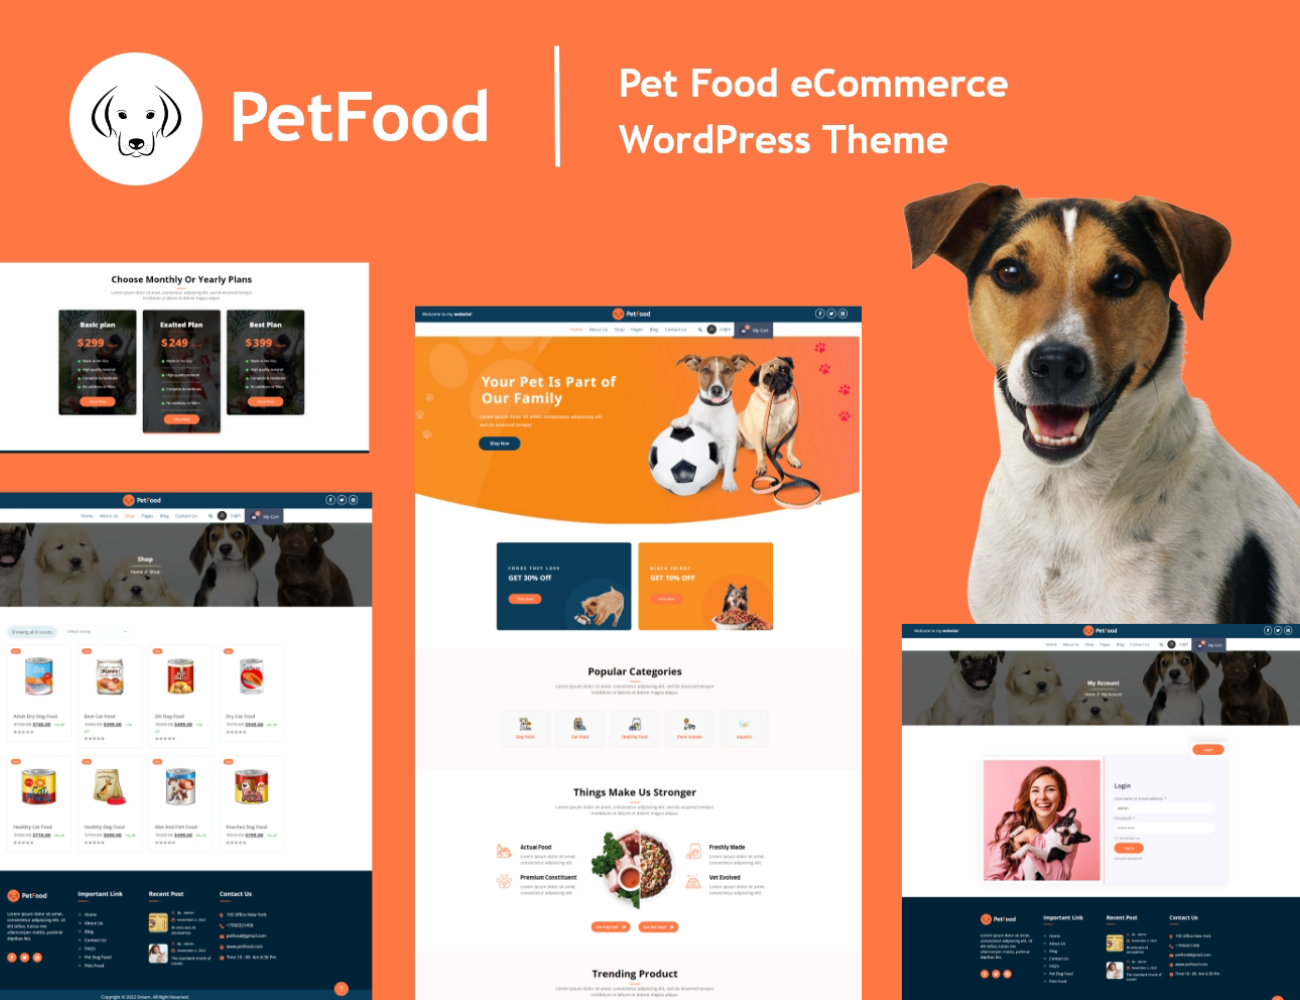 Pet Food WooCommerce WordPress Theme